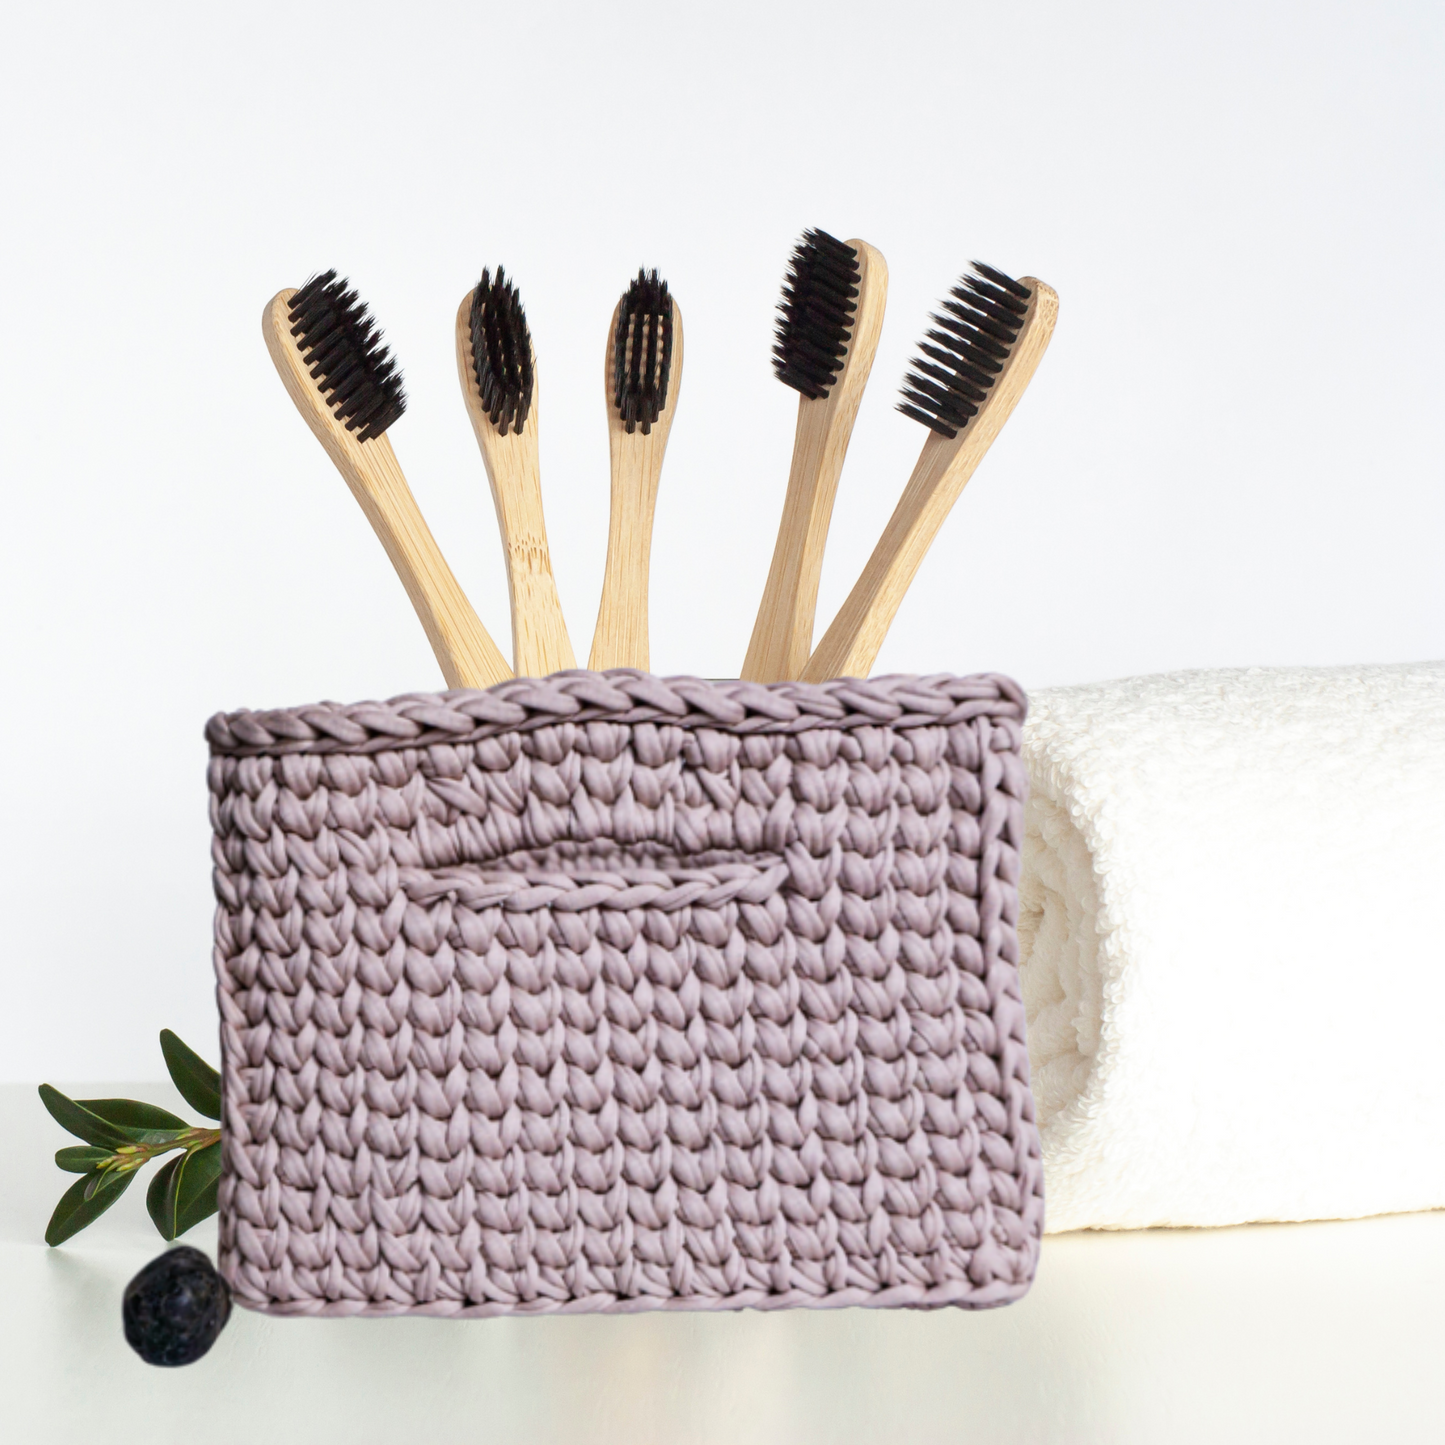 DIY Crochet Square Basket Kit with handles